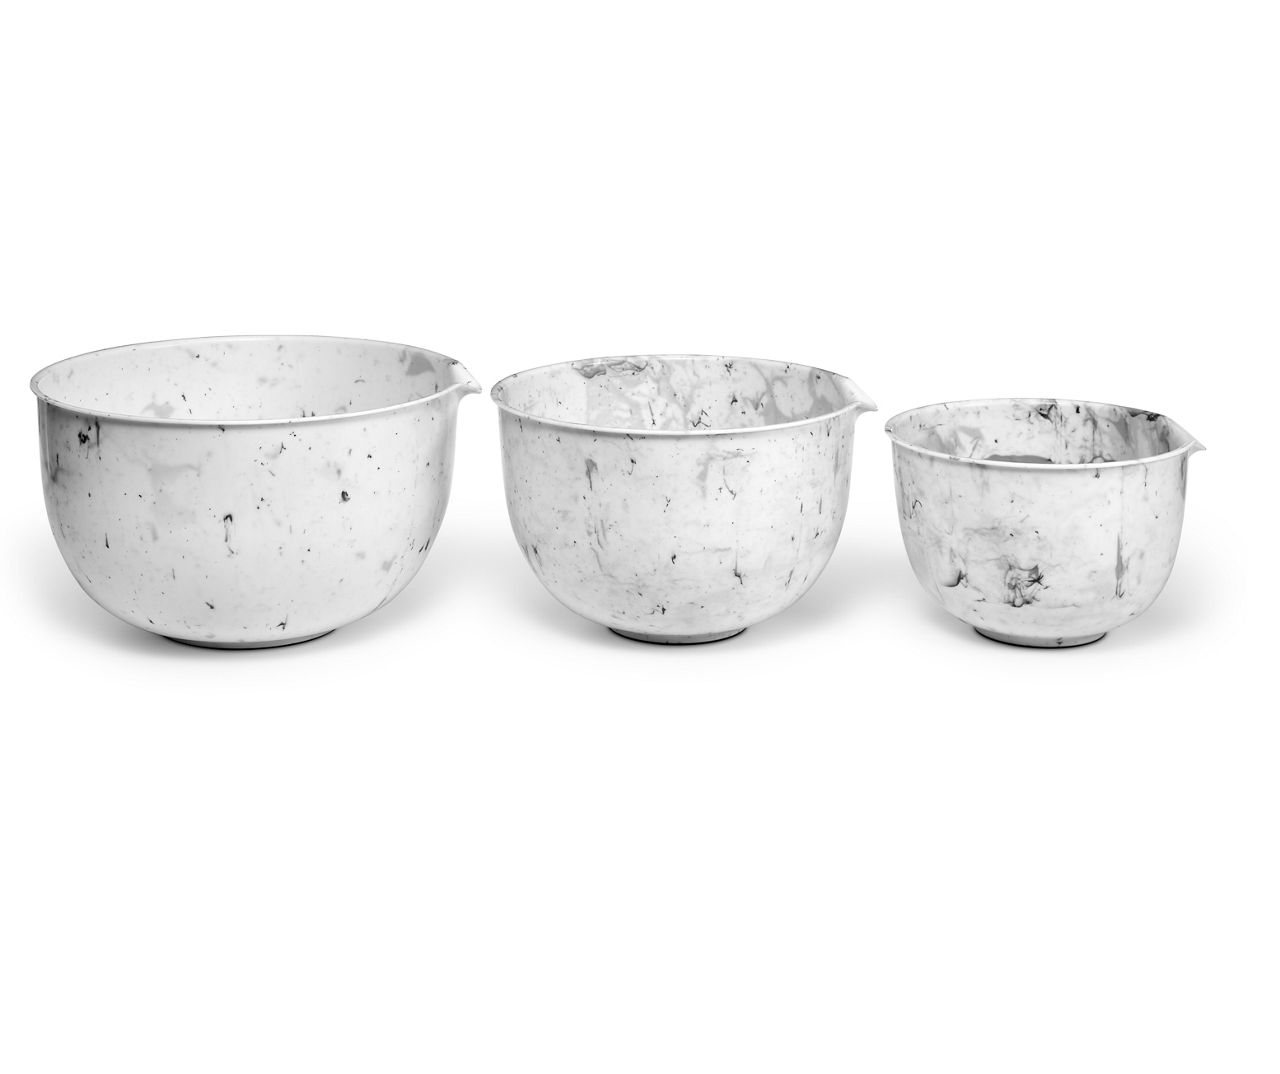 3-Piece Mixing Bowl Set - White